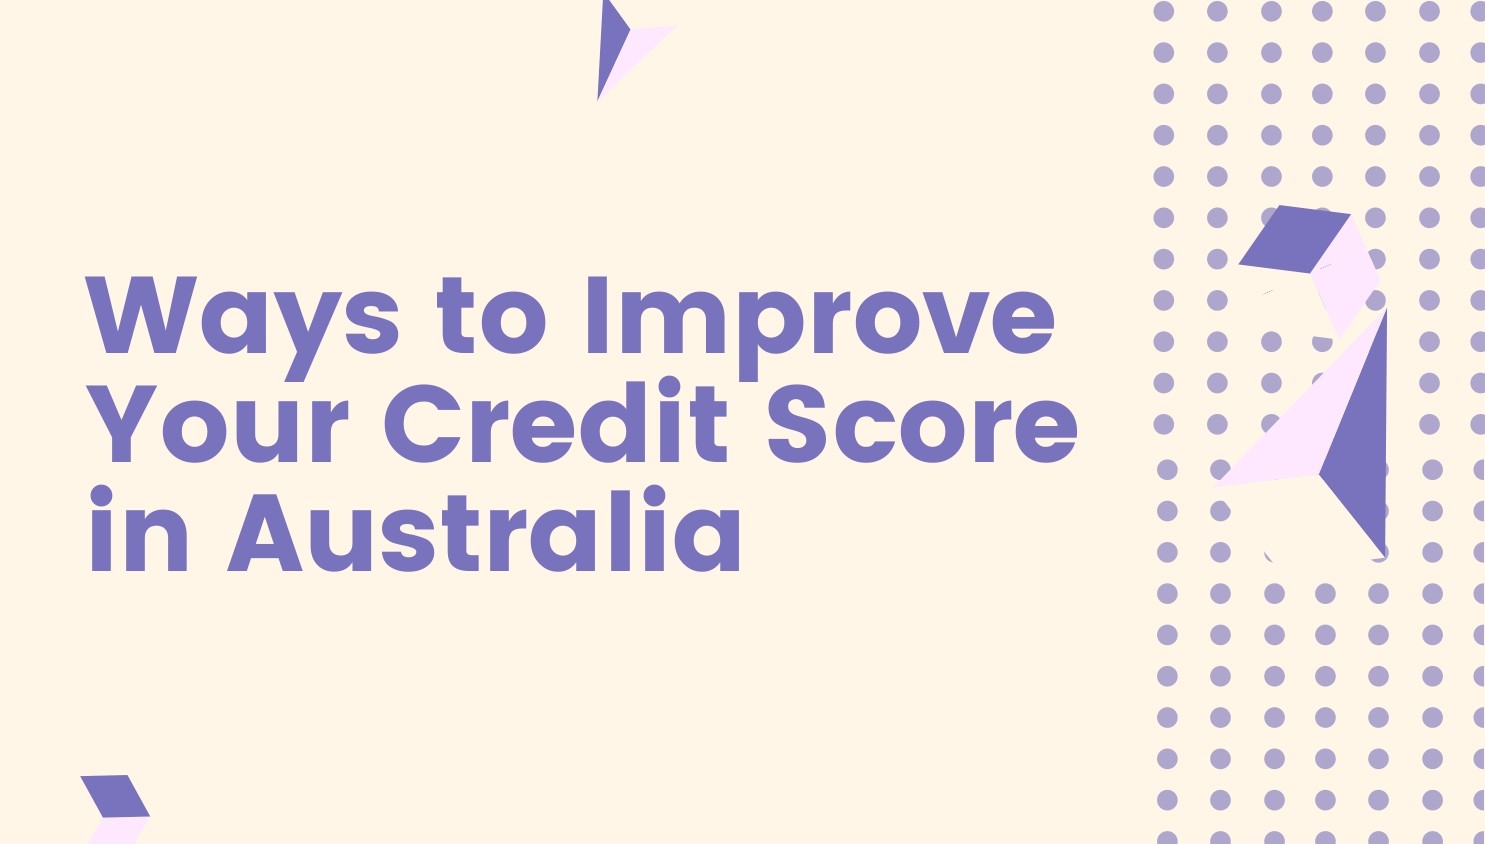 Improve Your Credit Score in Australia